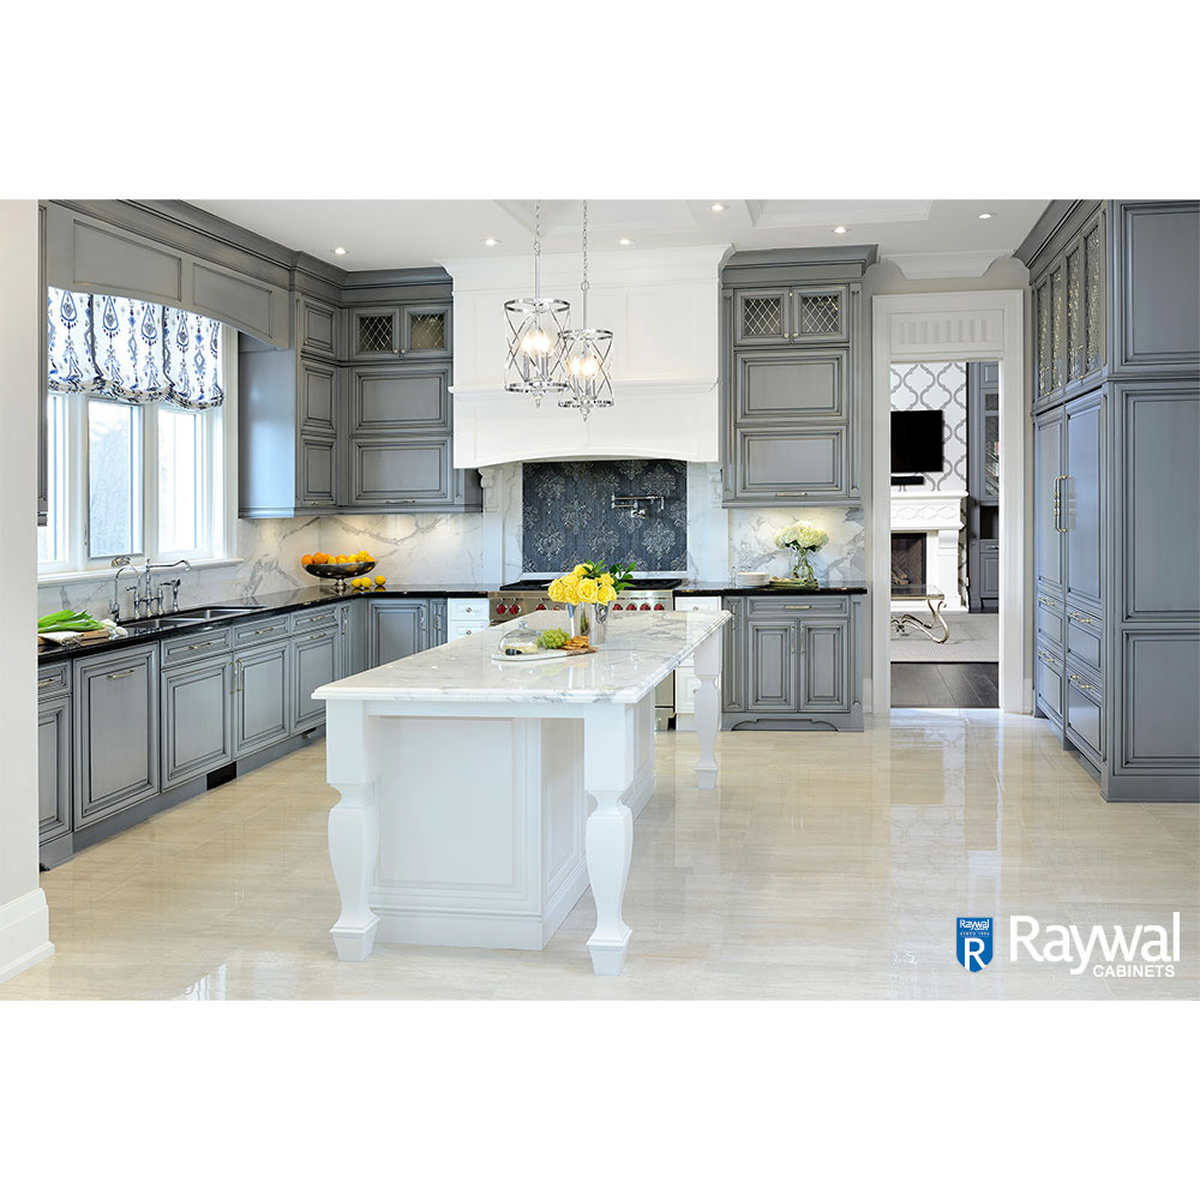 raywal custom kitchen cabinets